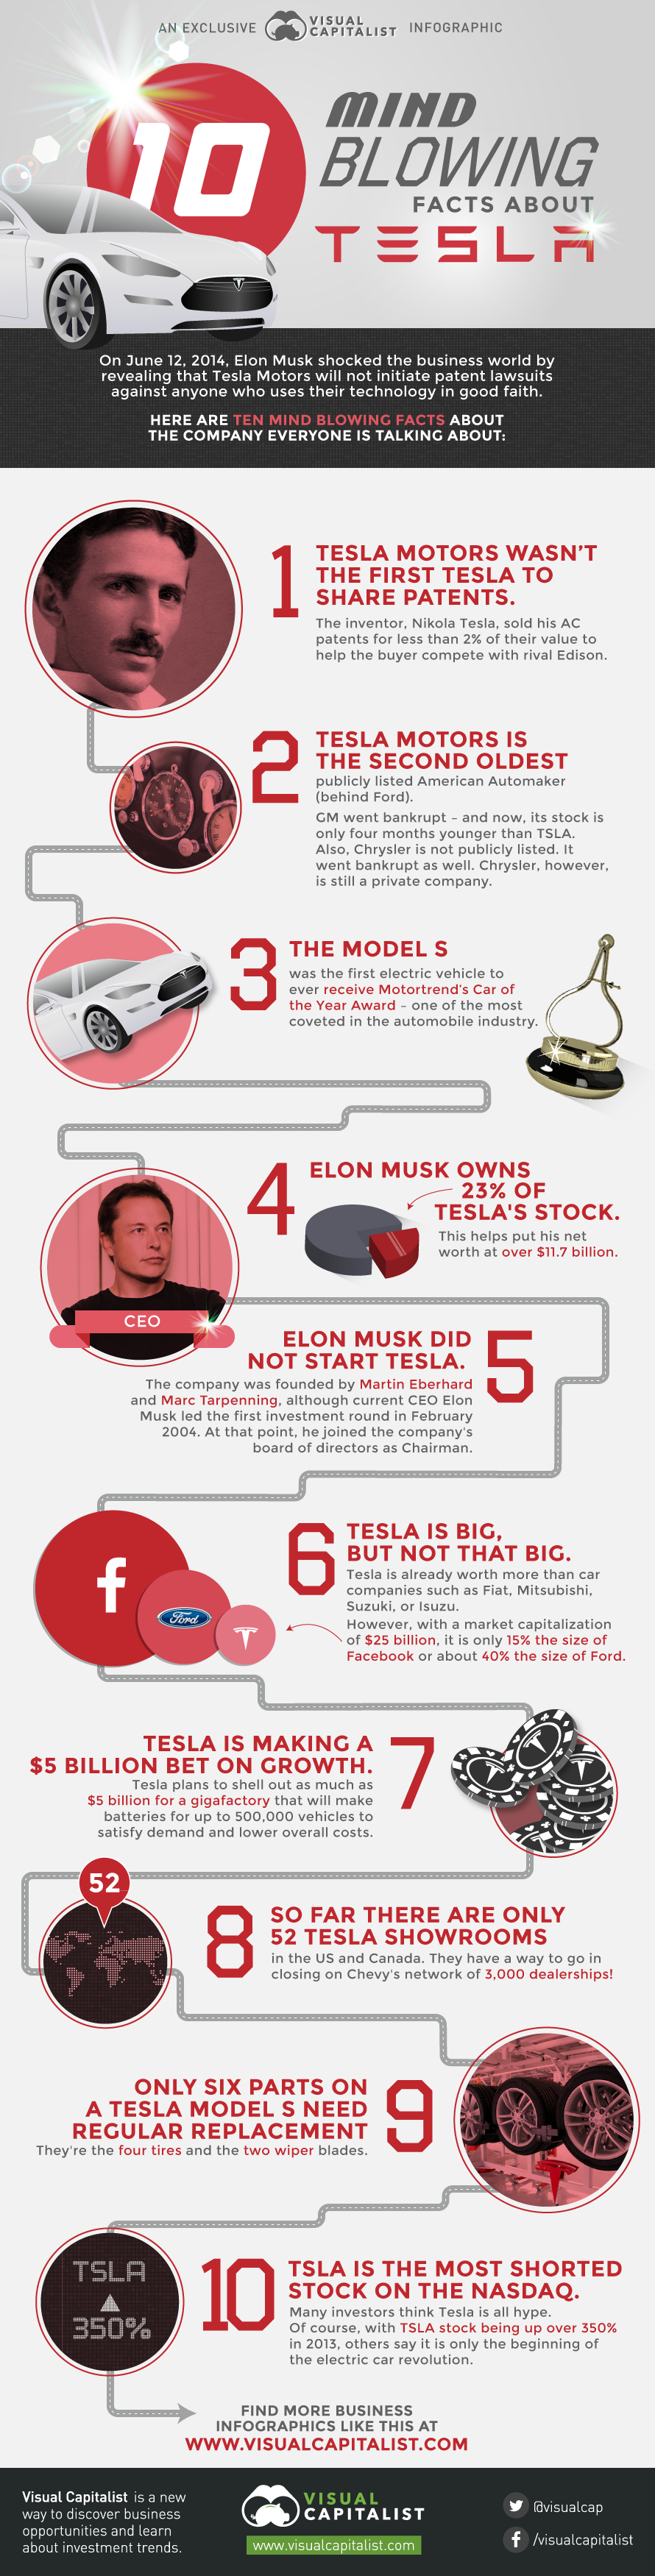 Mind Blowing Facts About Tesla Motors (TSLA)